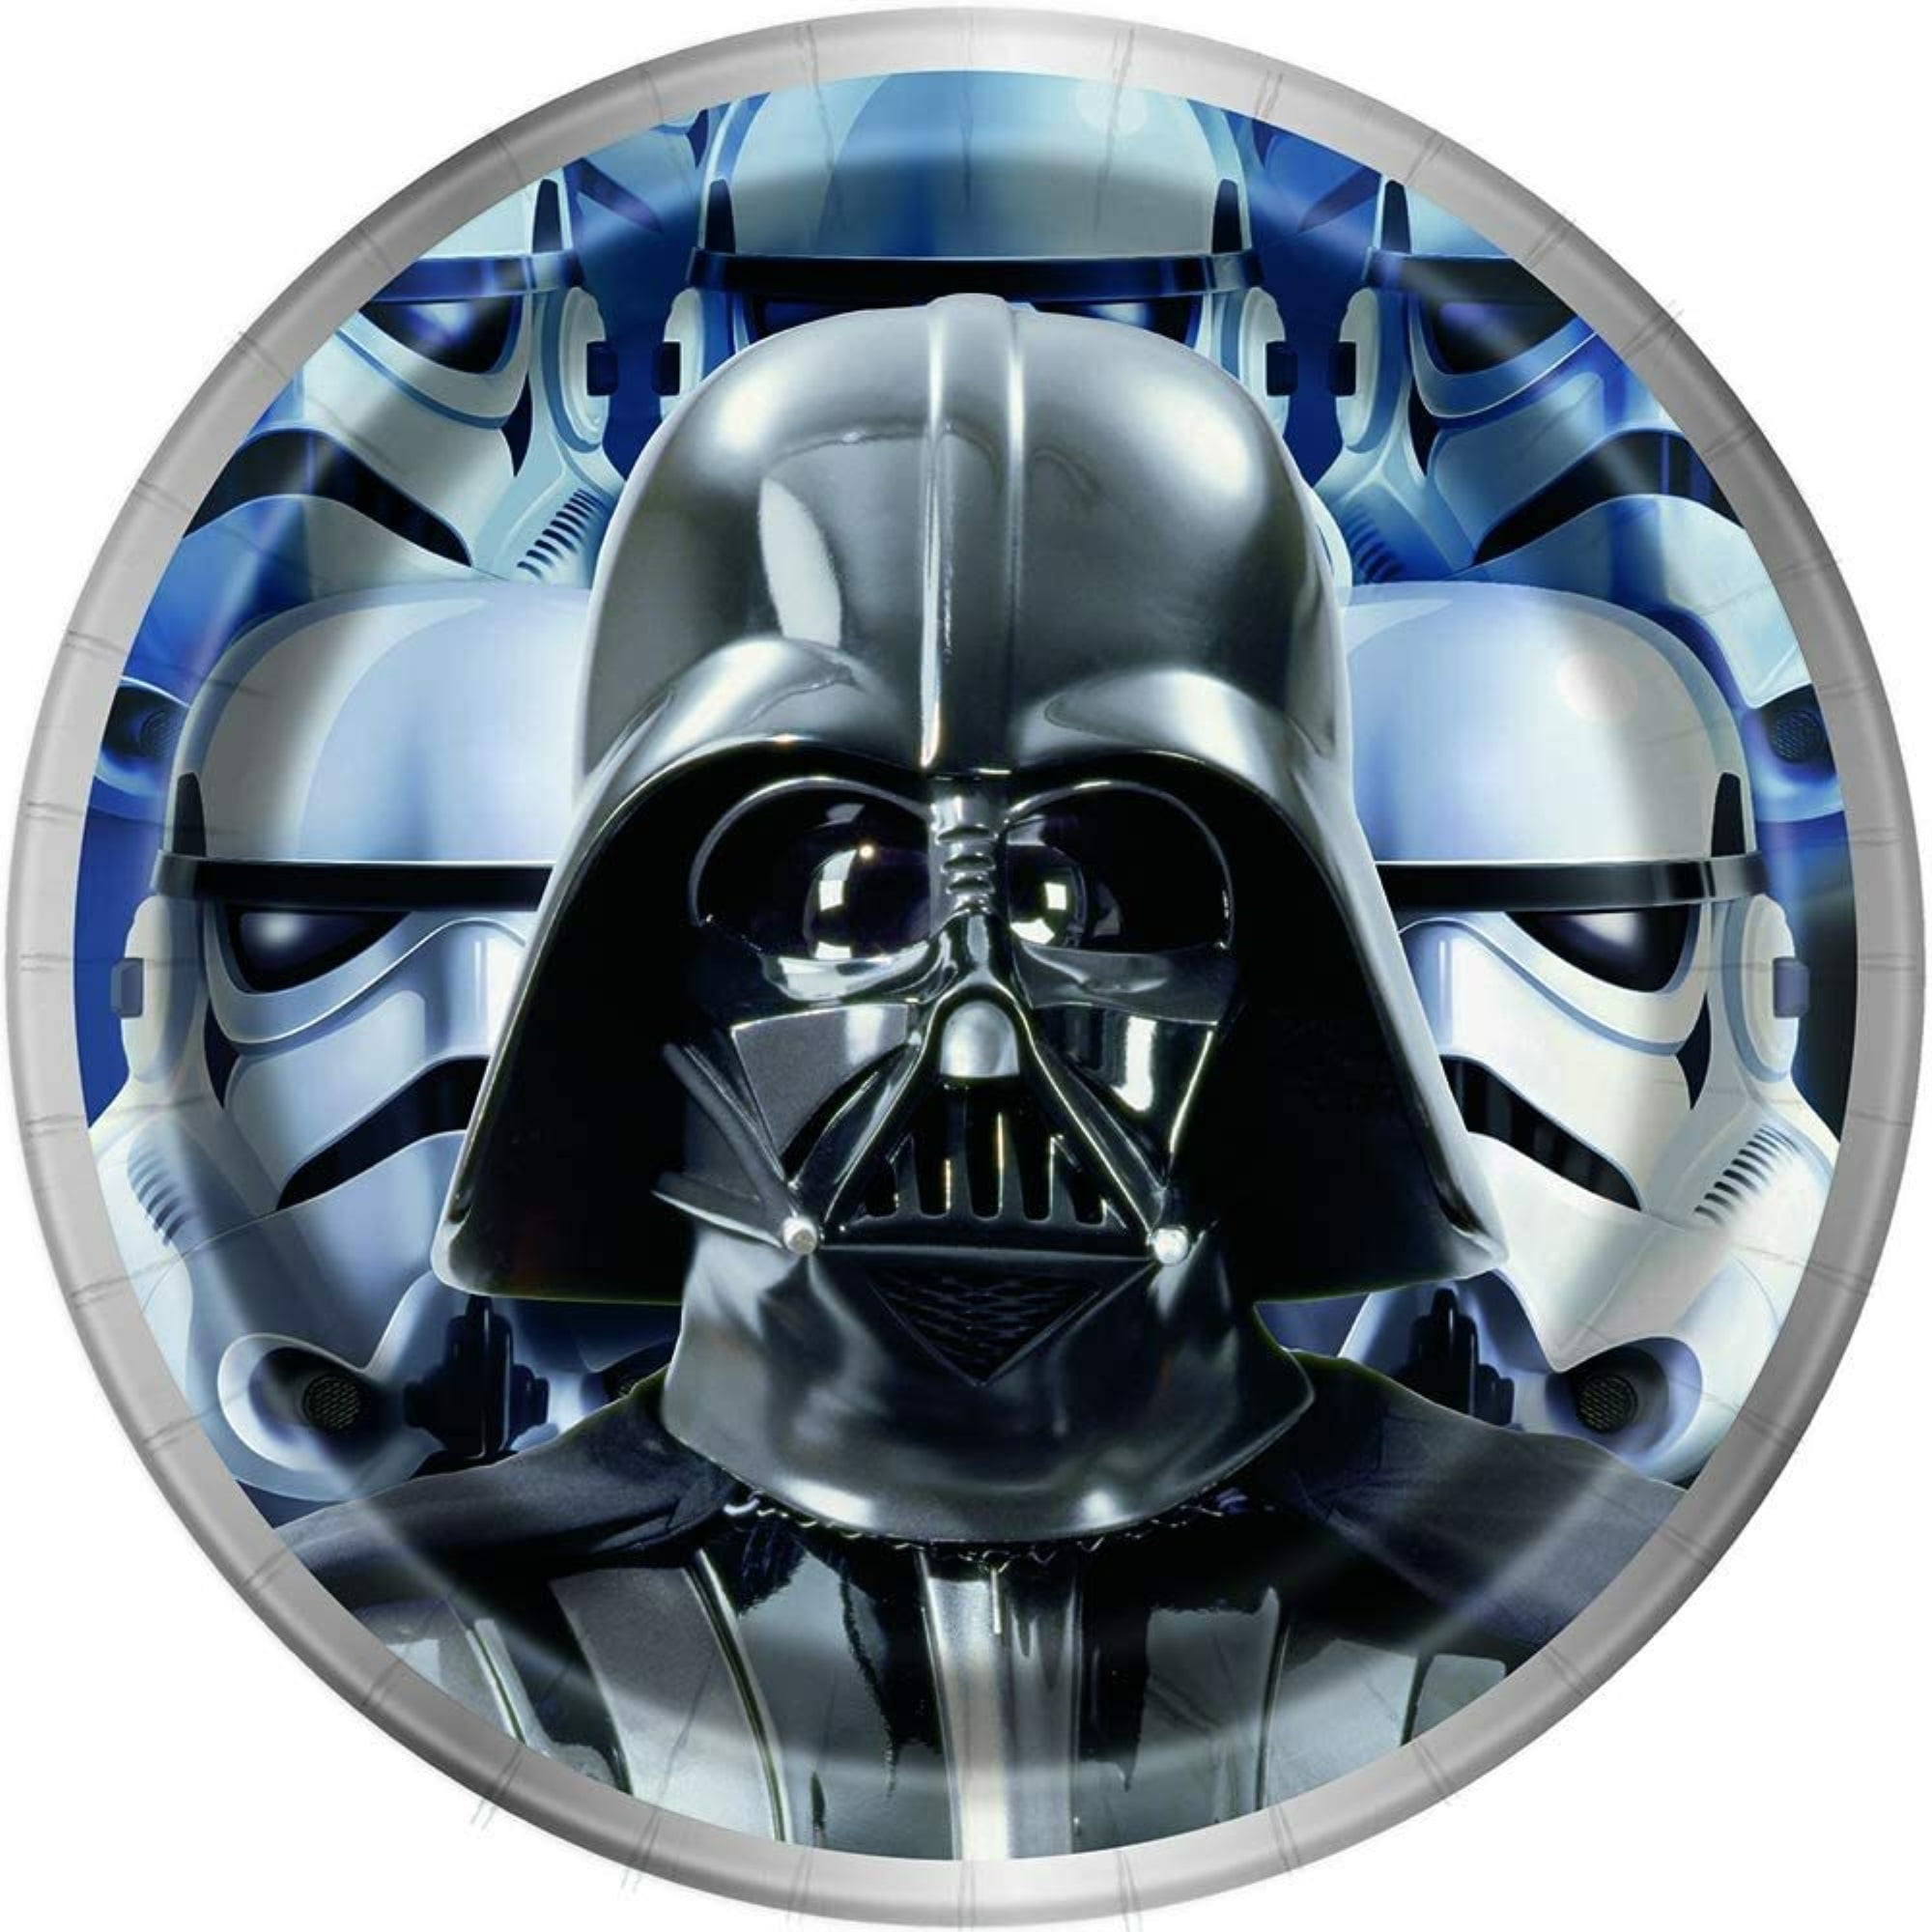 Jedi New STAR WARS THE Force Awakens PAPER PLATES 8 X 5 Packs 6 3/4 40 Plates 